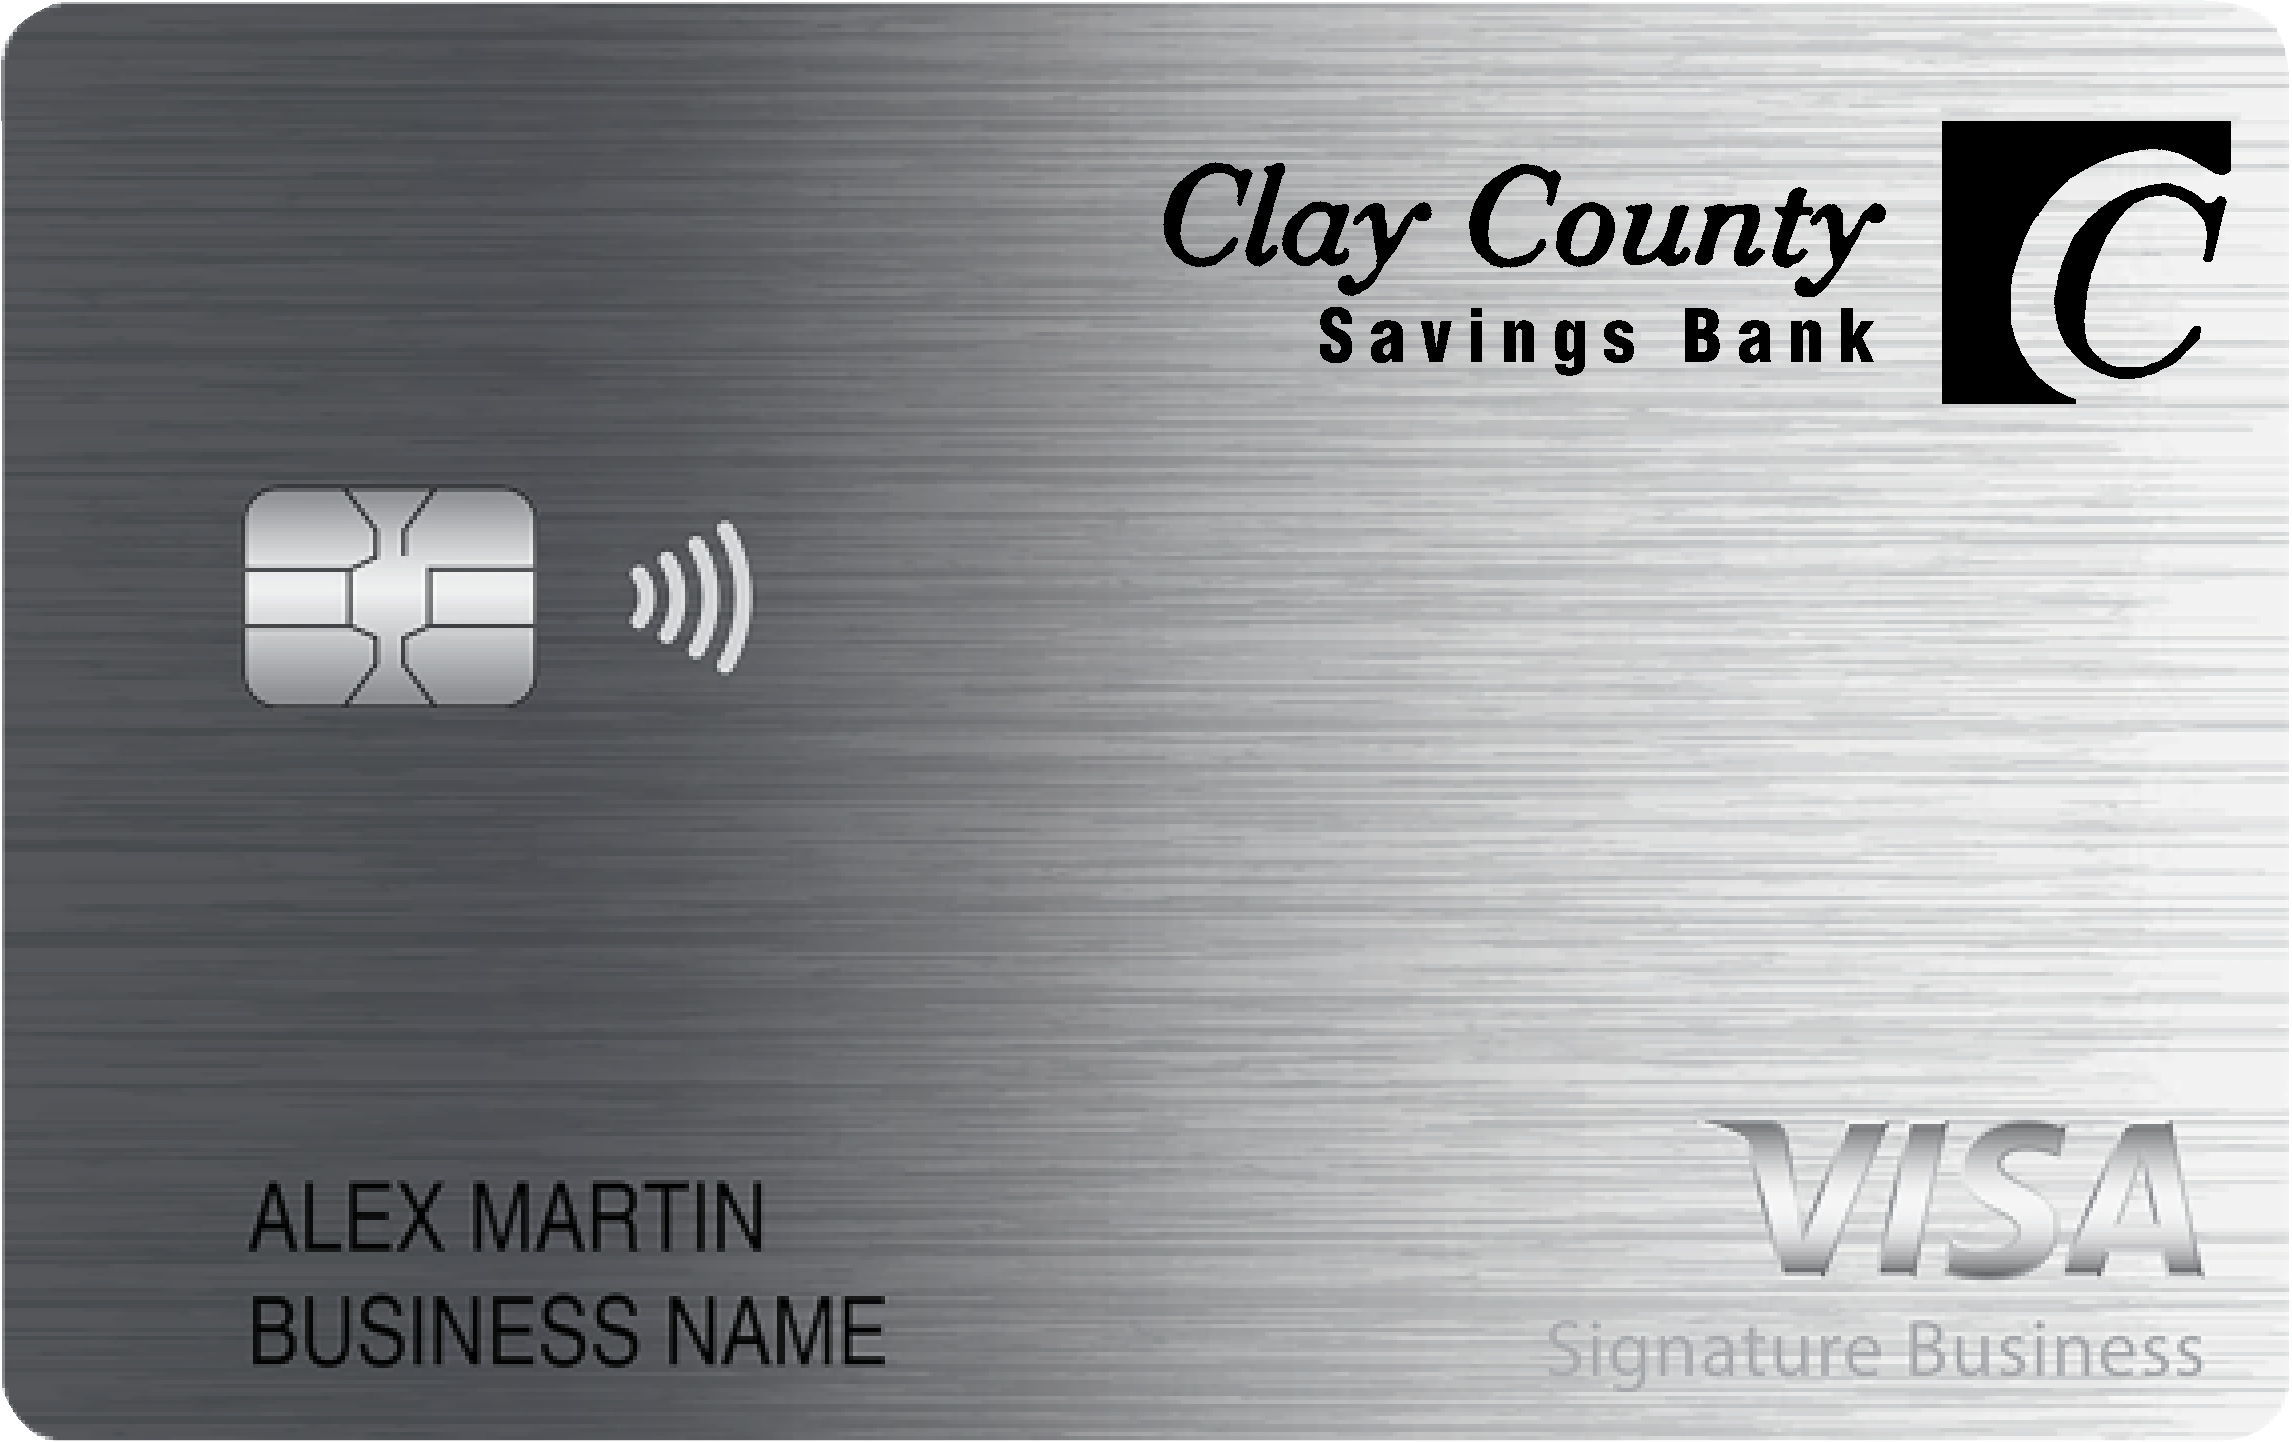 Clay County Savings Bank Smart Business Rewards Card